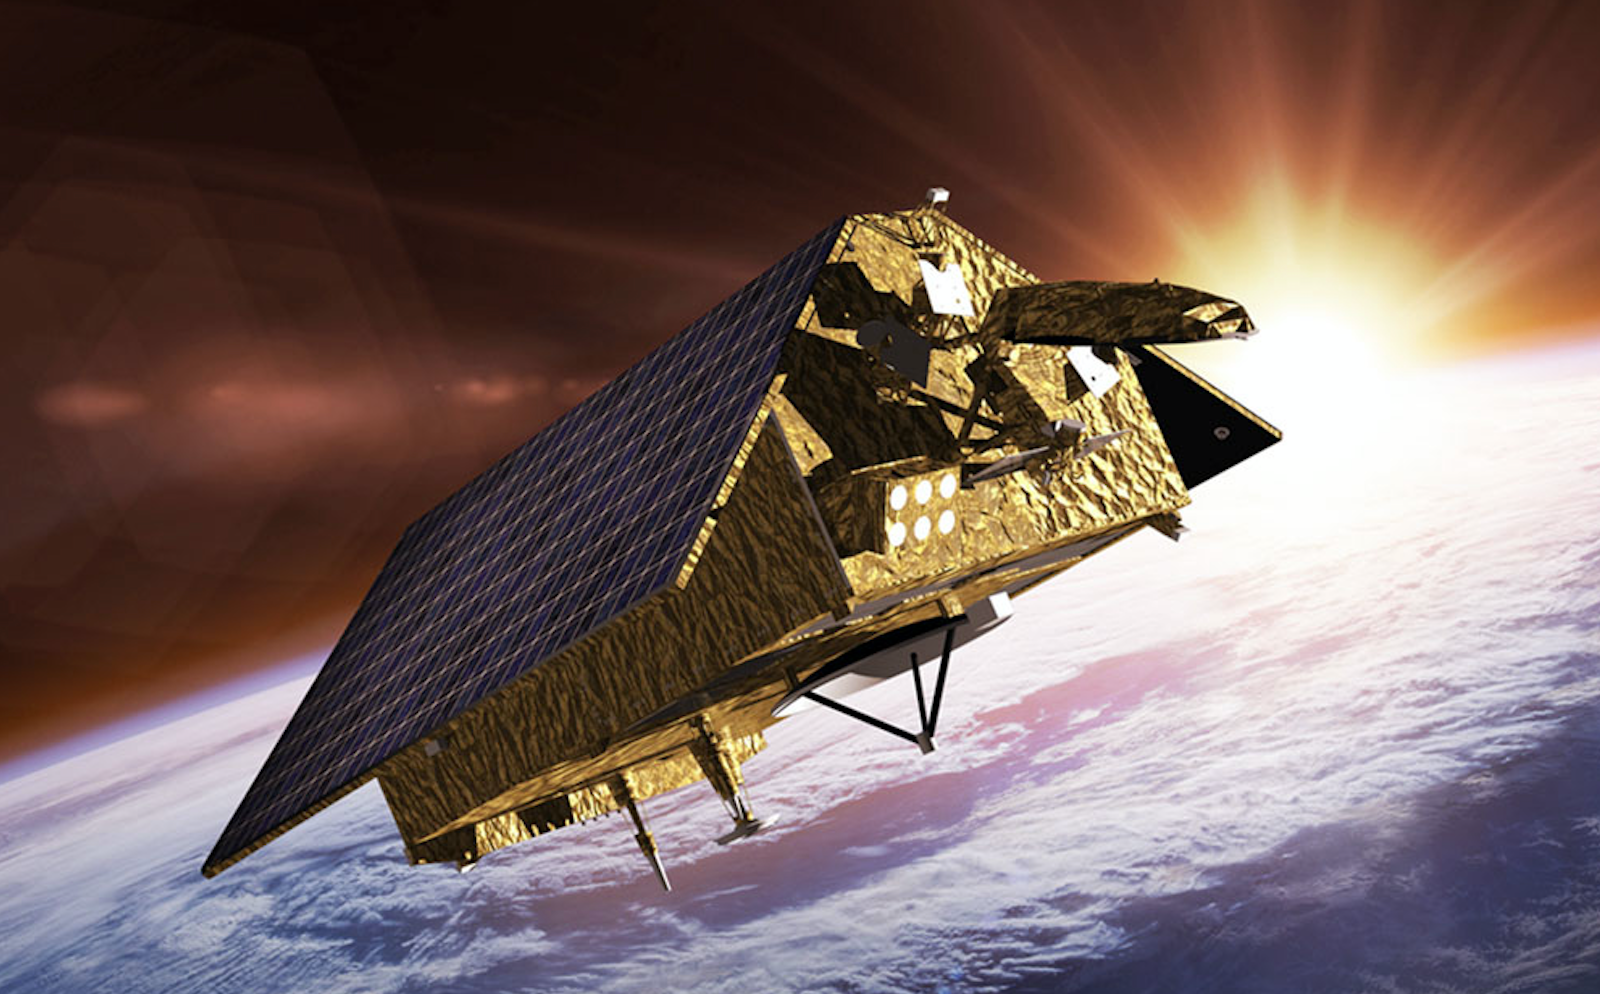 Depiction of the Sentinel-6 spacecraft in orbit.